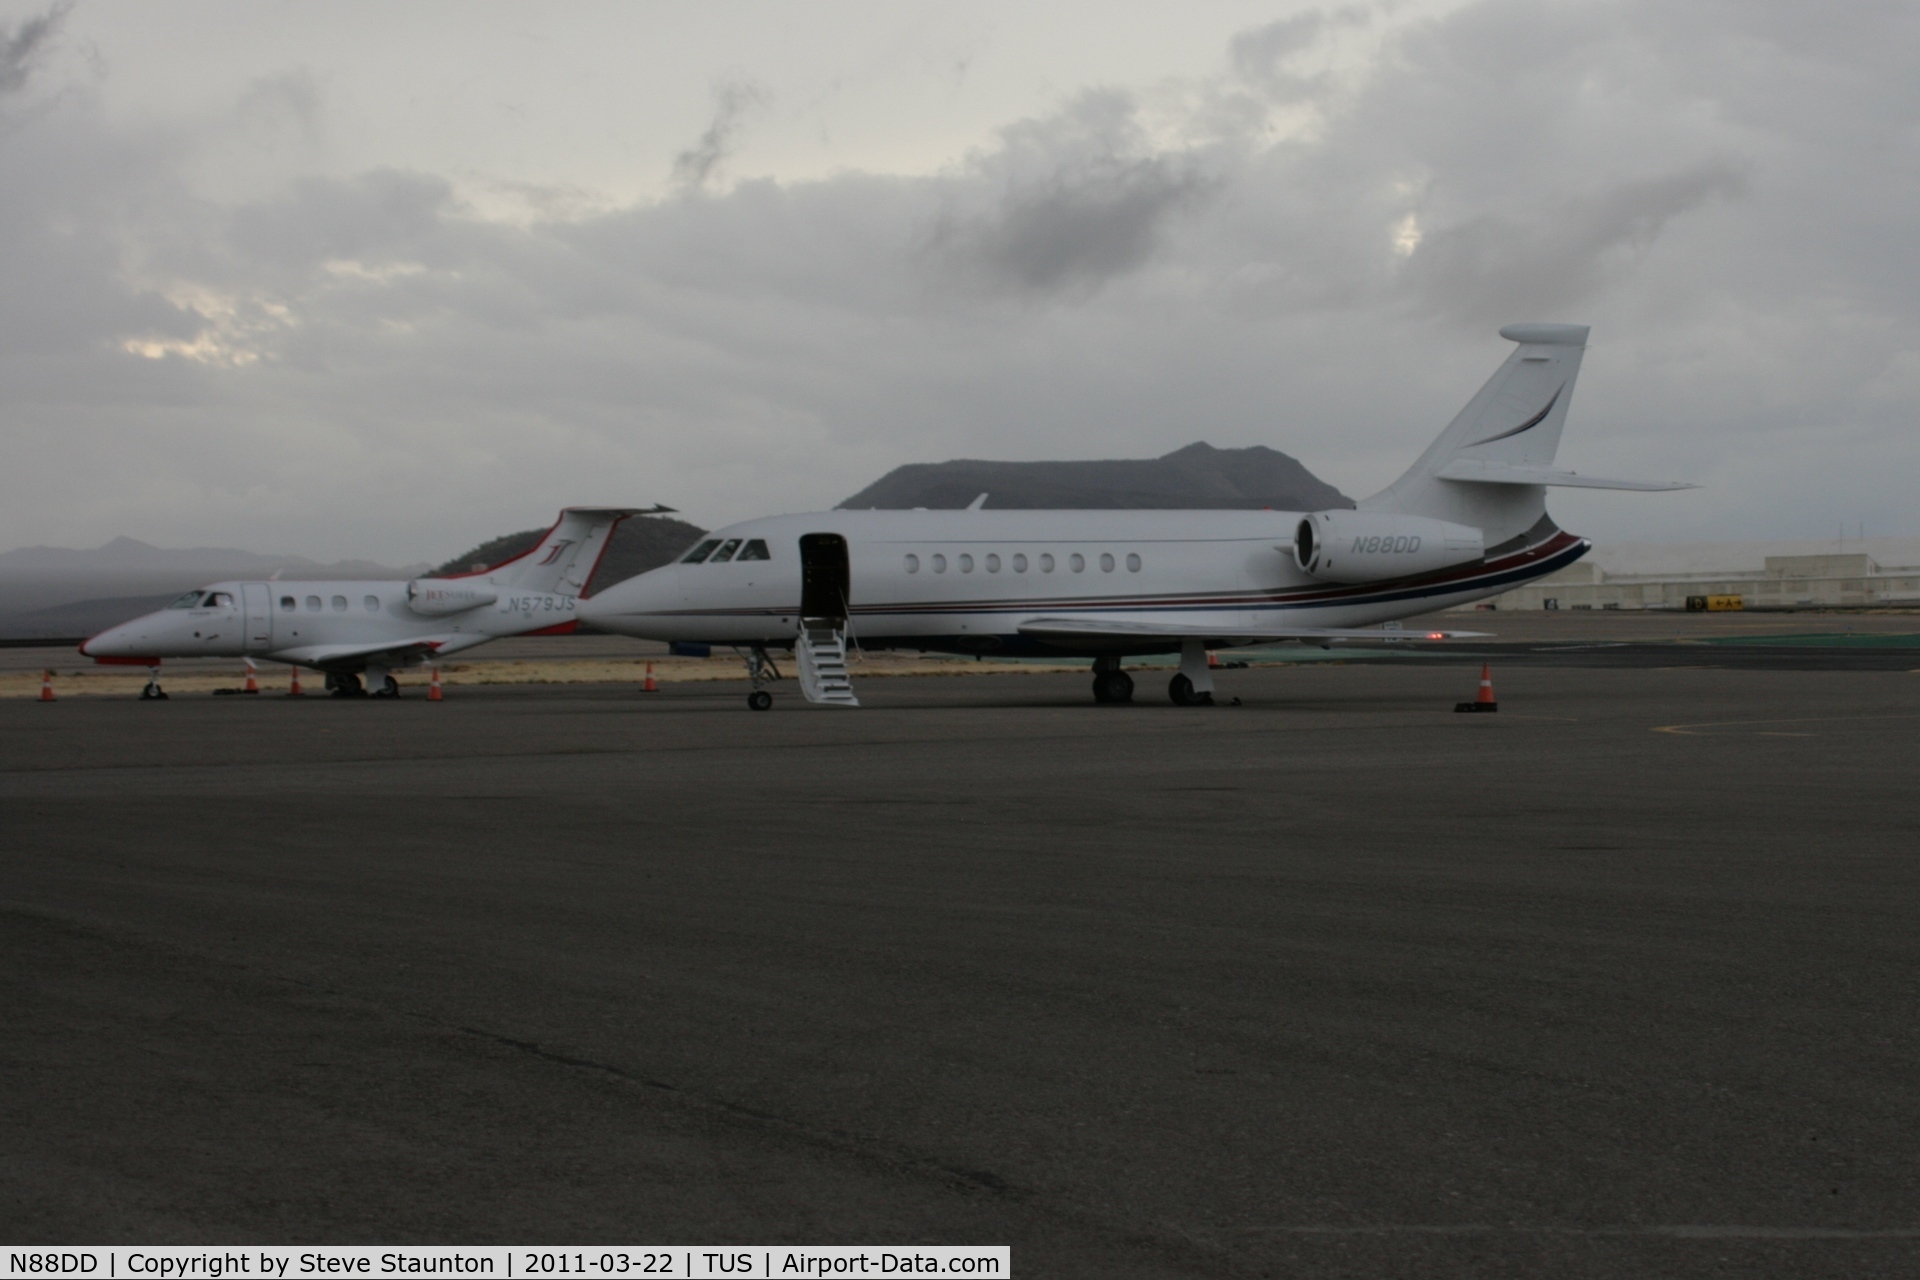 N88DD, 2002 Dassault Falcon 2000 C/N 204, Taken at Tucson International Airport, in March 2011 whilst on an Aeroprint Aviation tour